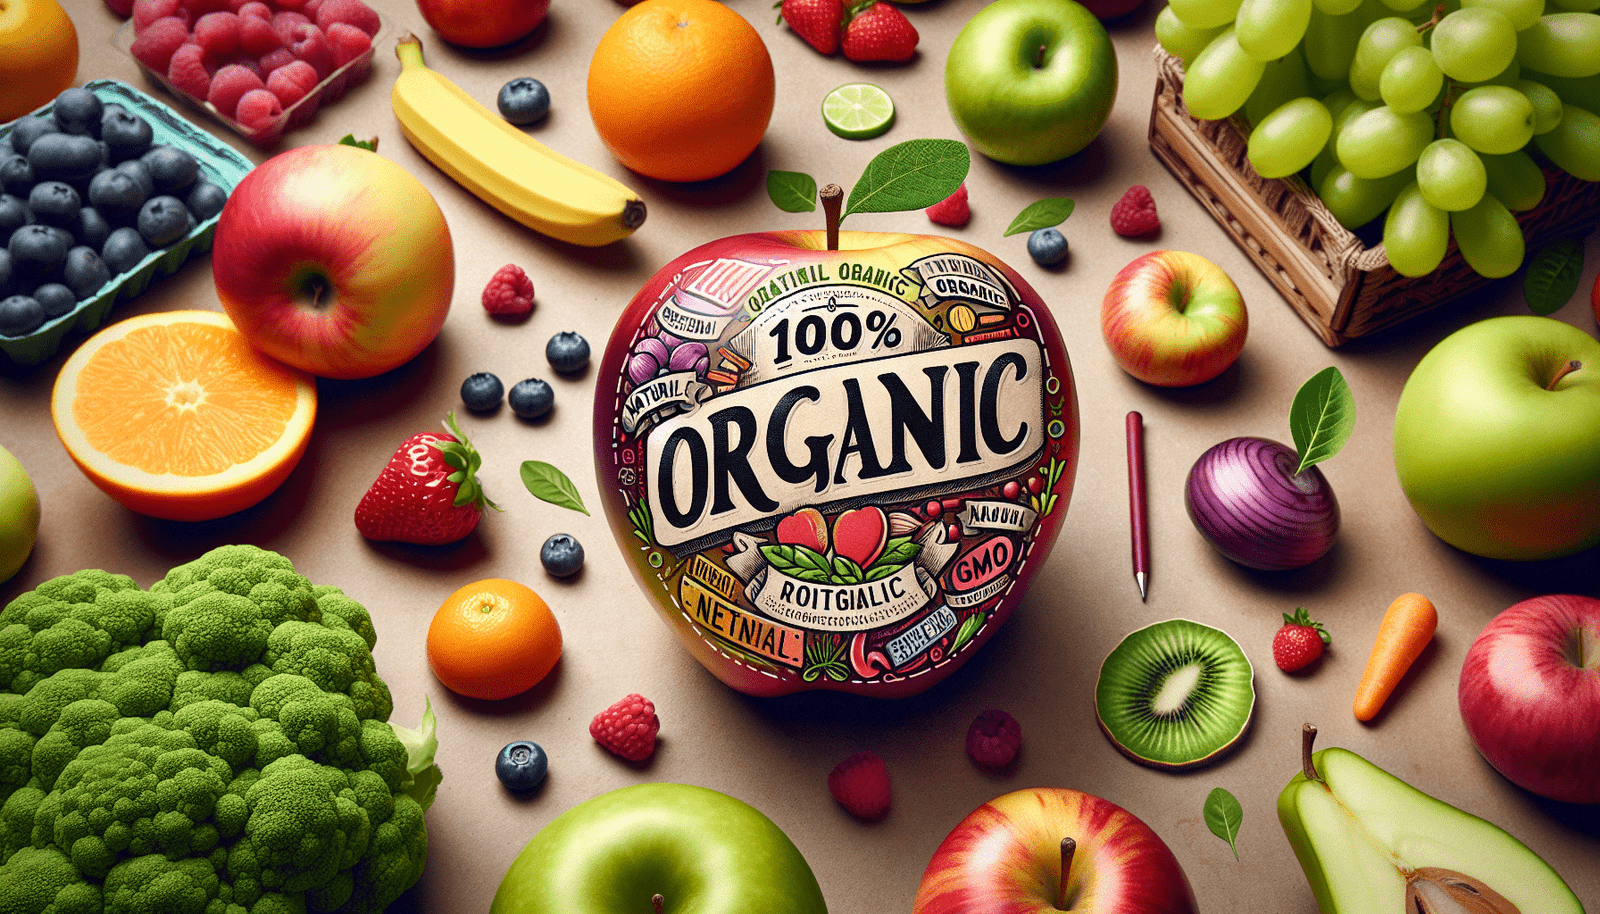 Decoding Food Marketing Terms: “Natural,” “Organic,” “Non-GMO